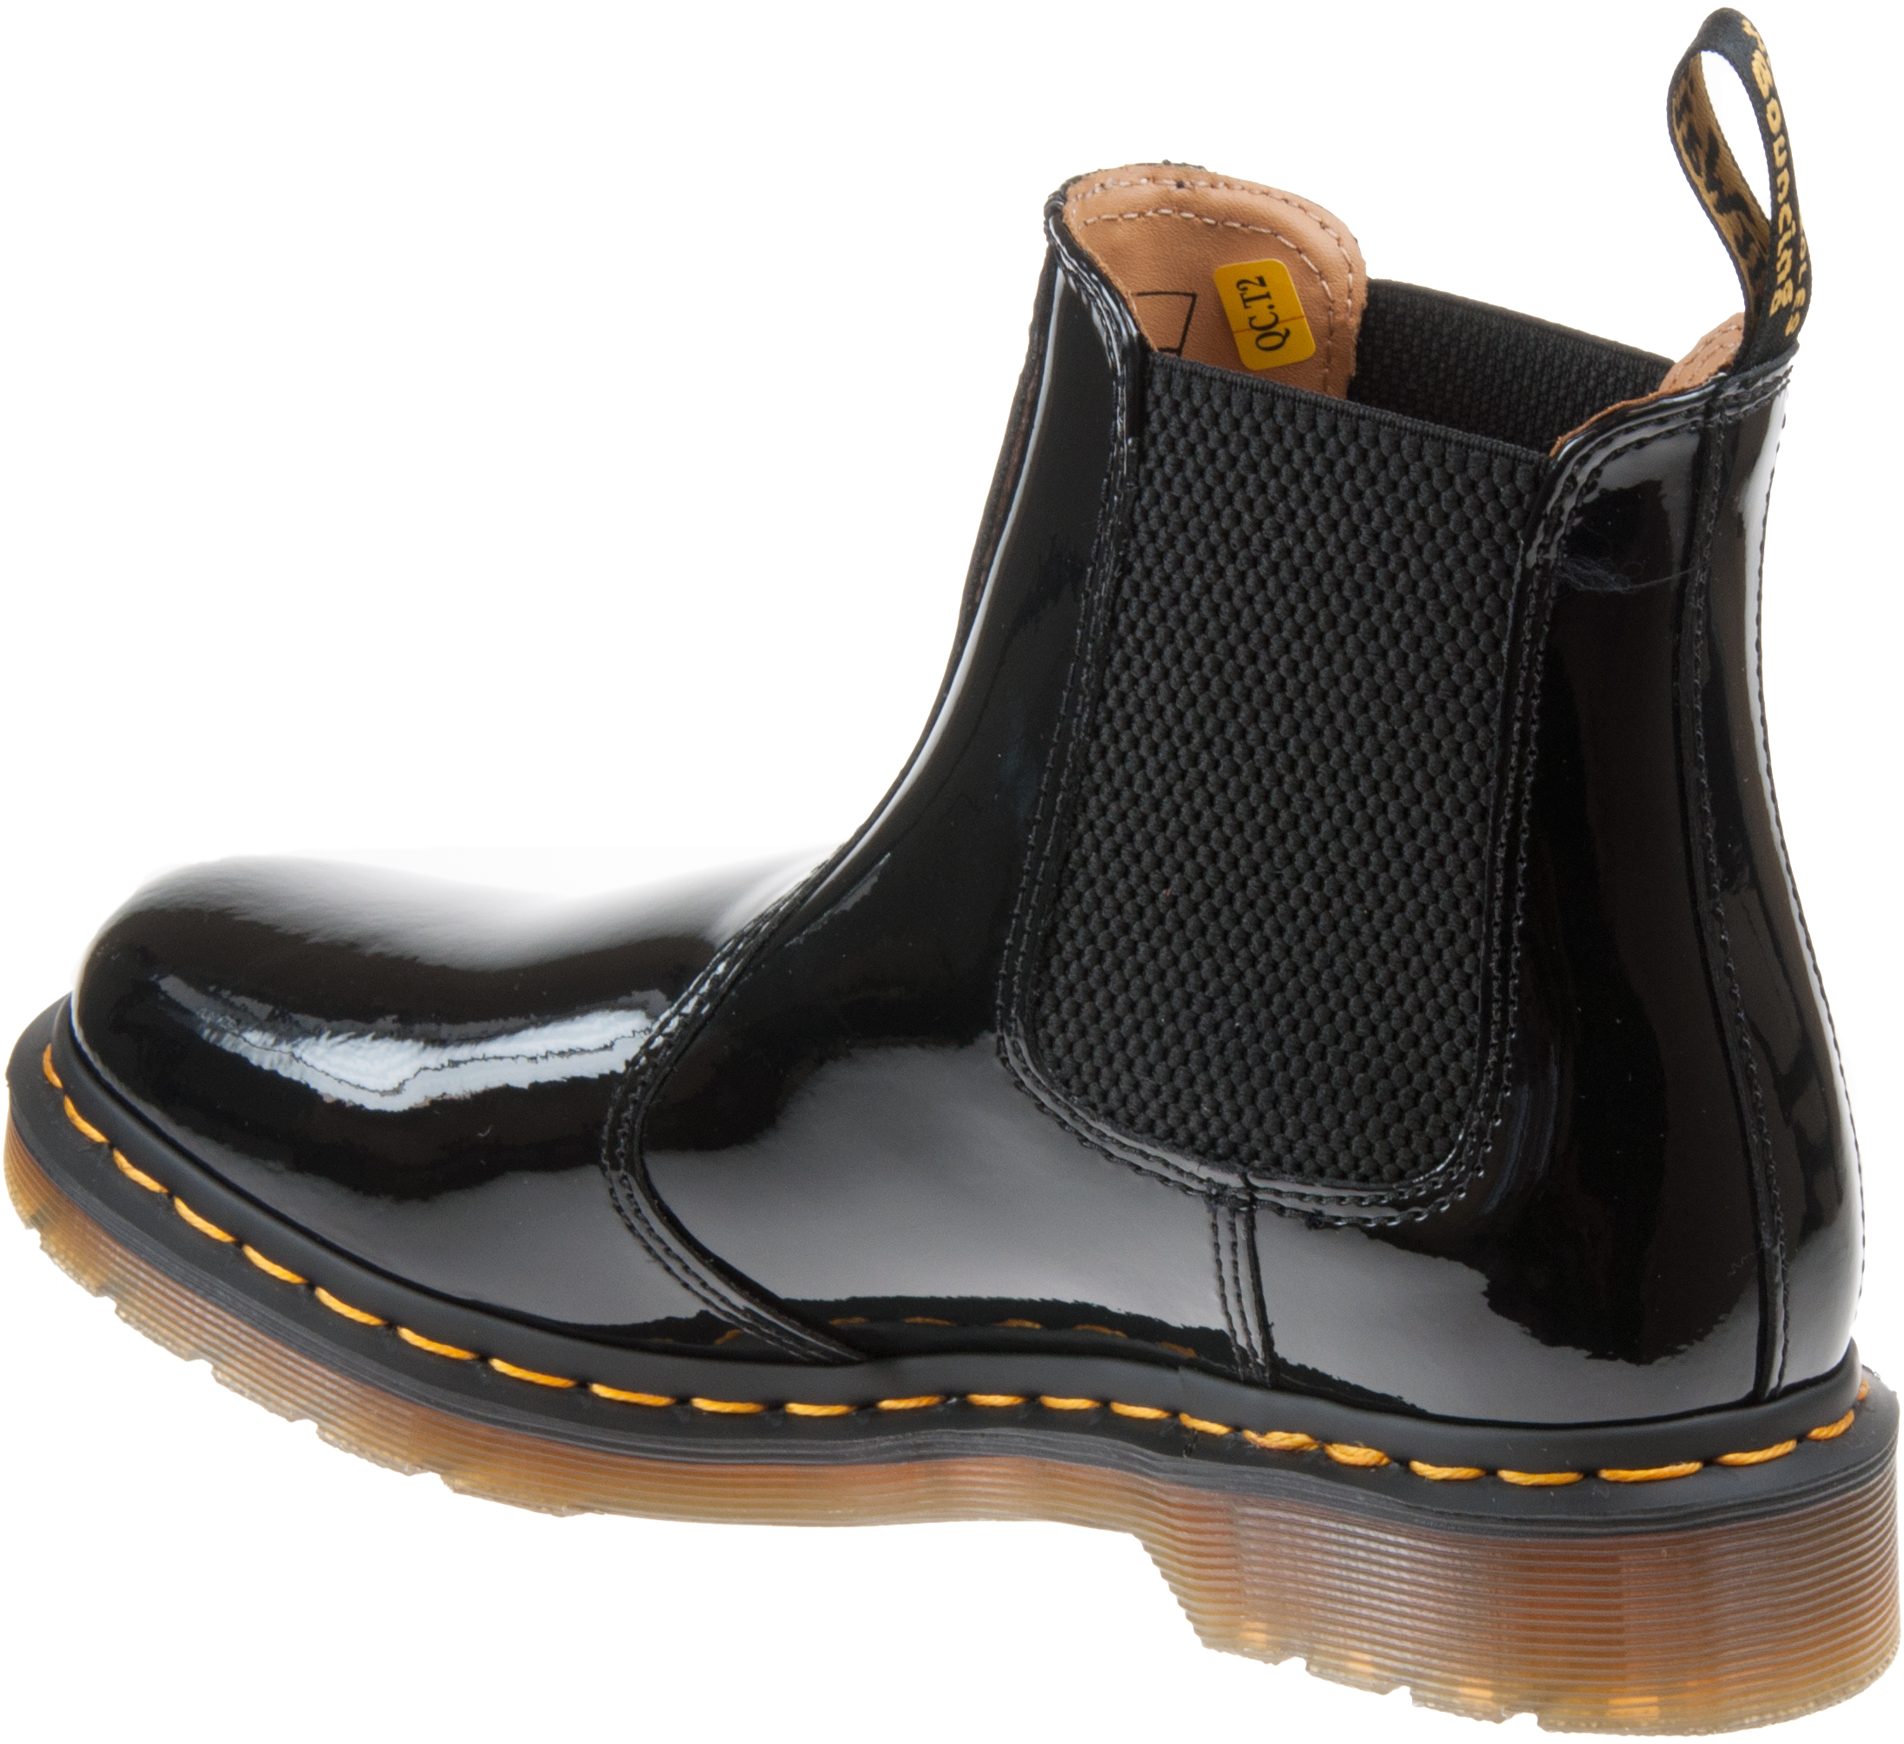 Dr. Martens 2976 Chelsea Boot Black Patent Lamper 25278001 - Ankle ...